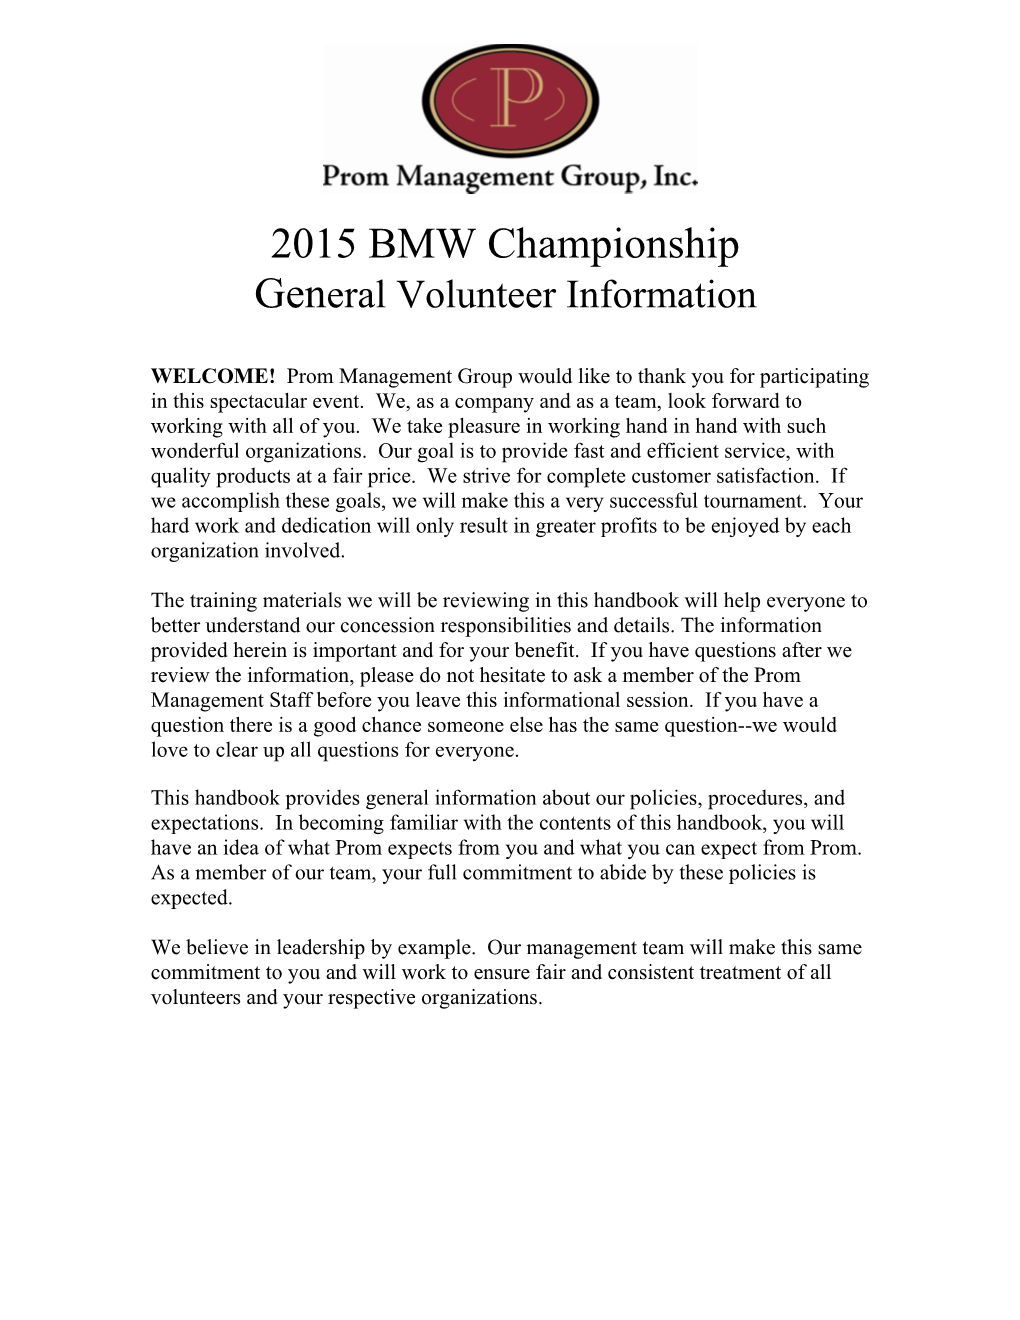 General Volunteer Information